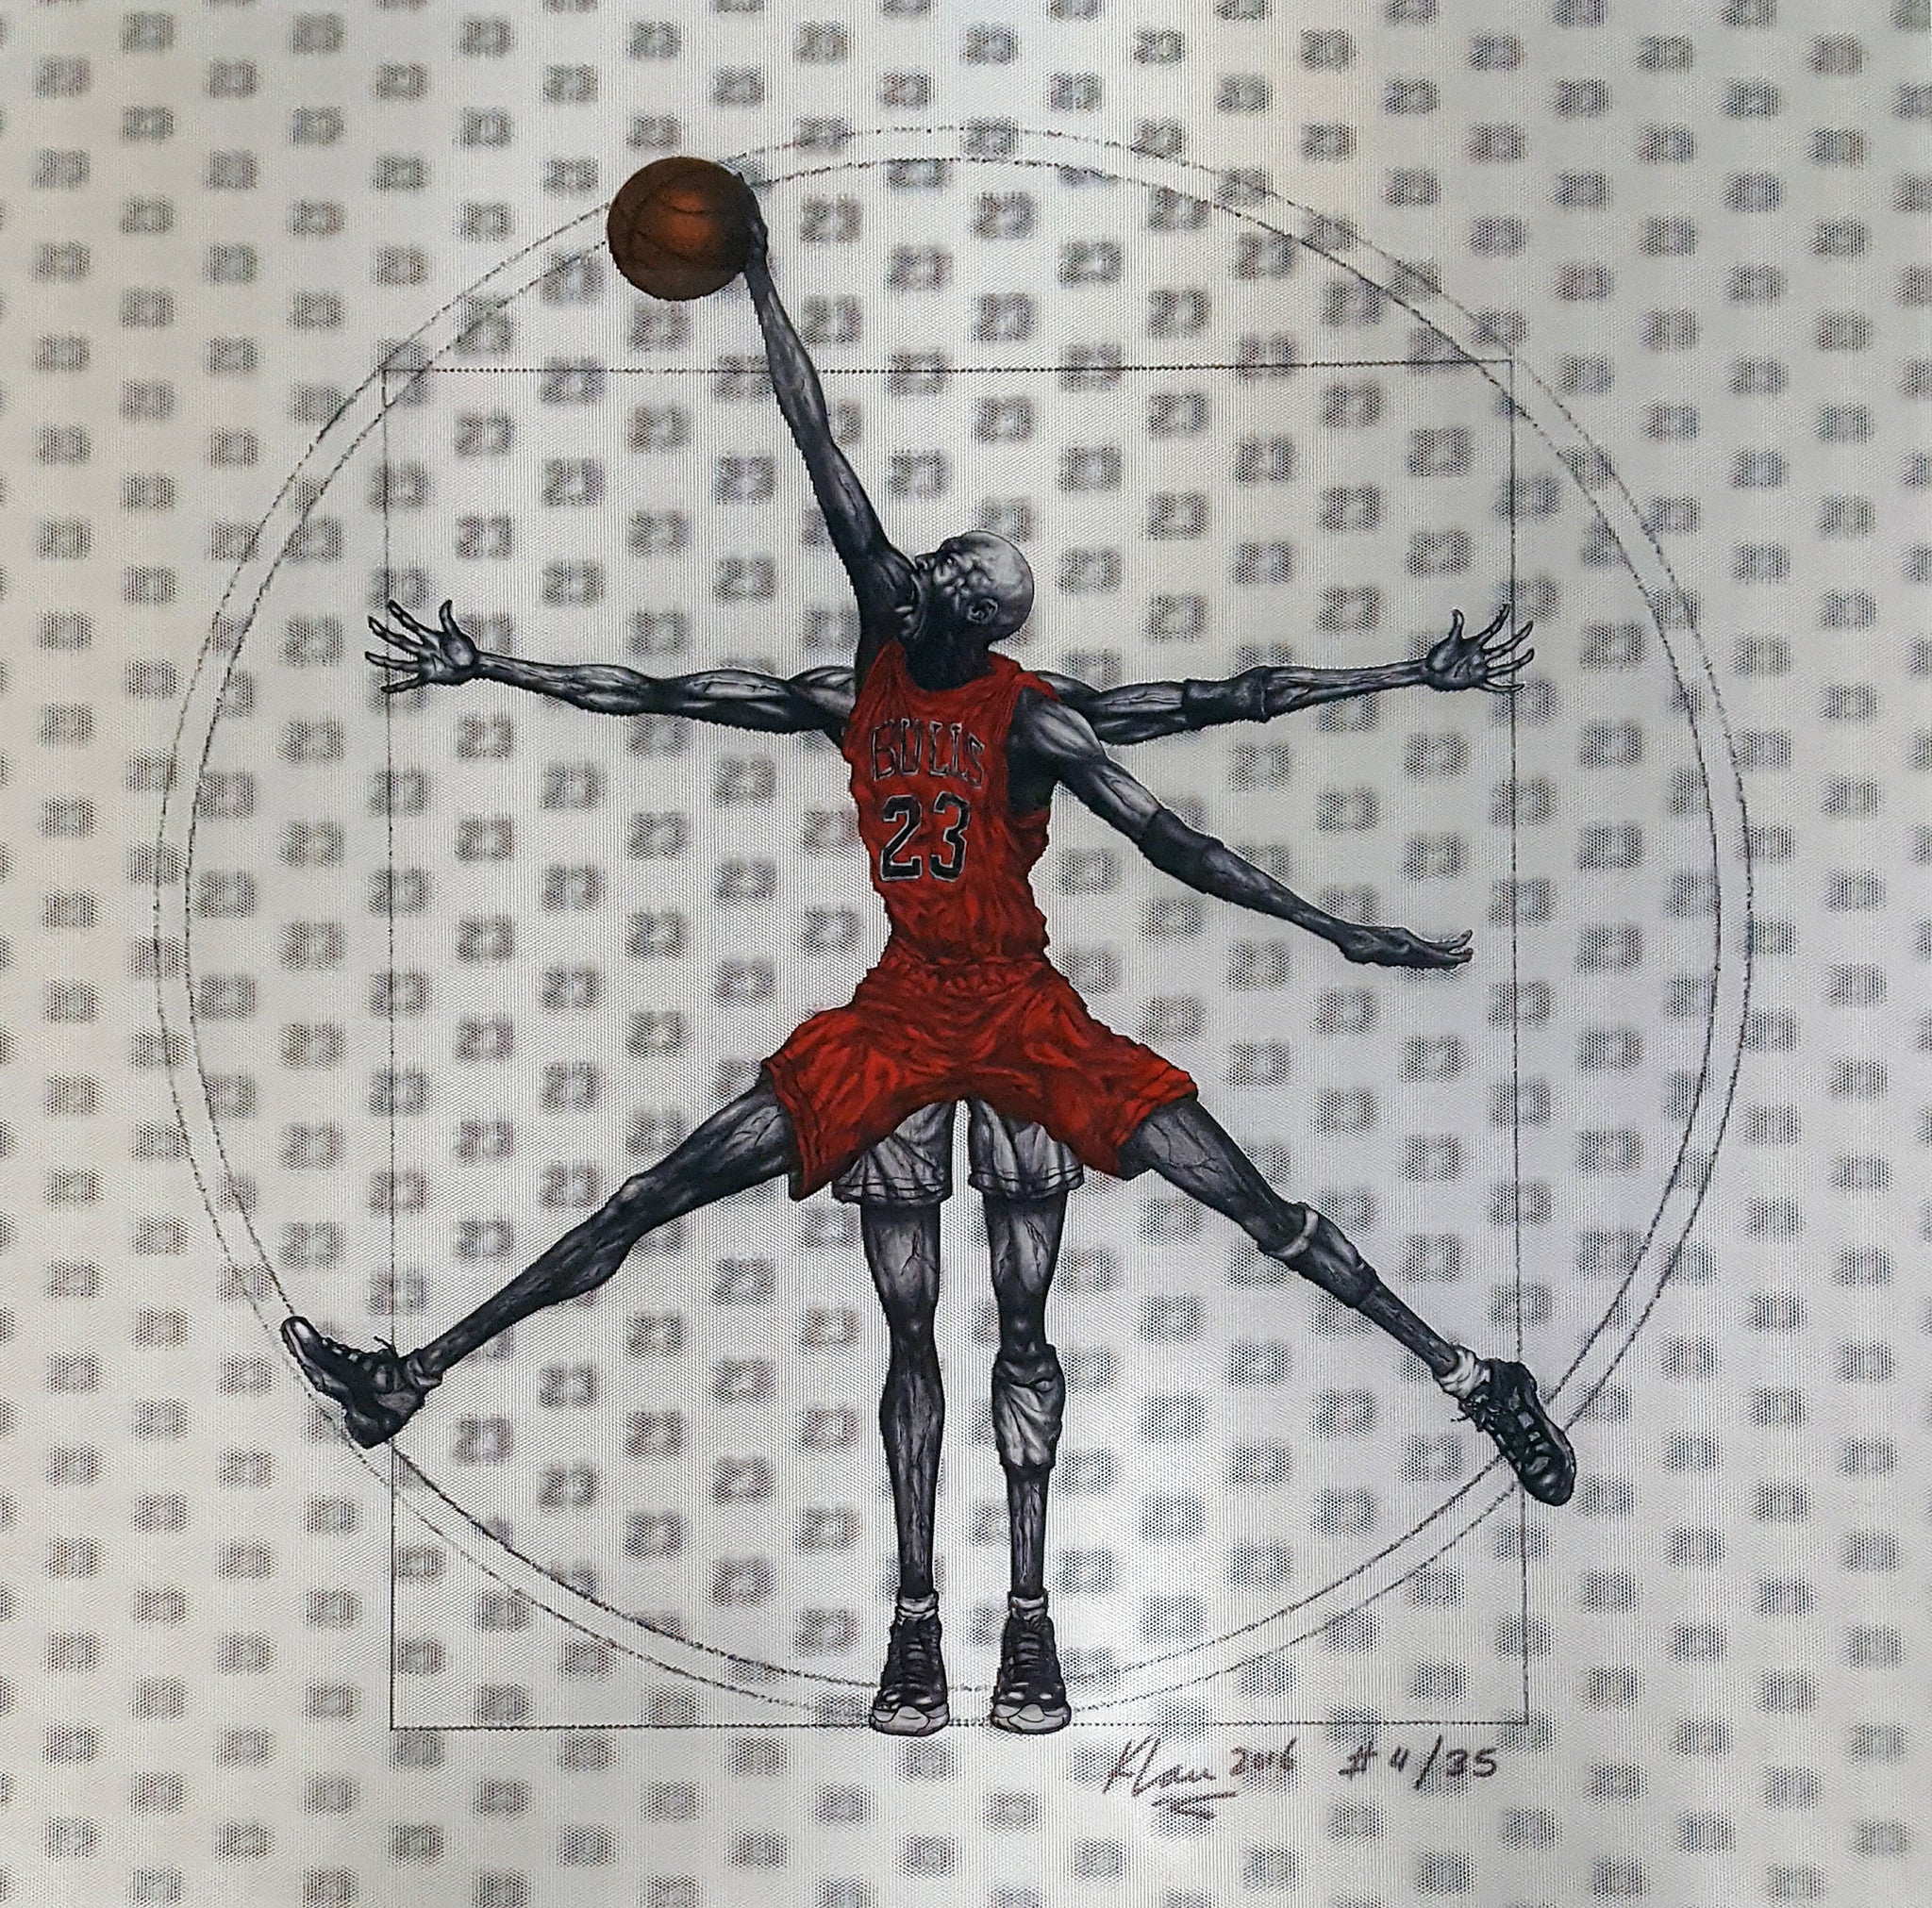 MJ Vitruvian Athlete, by Klau